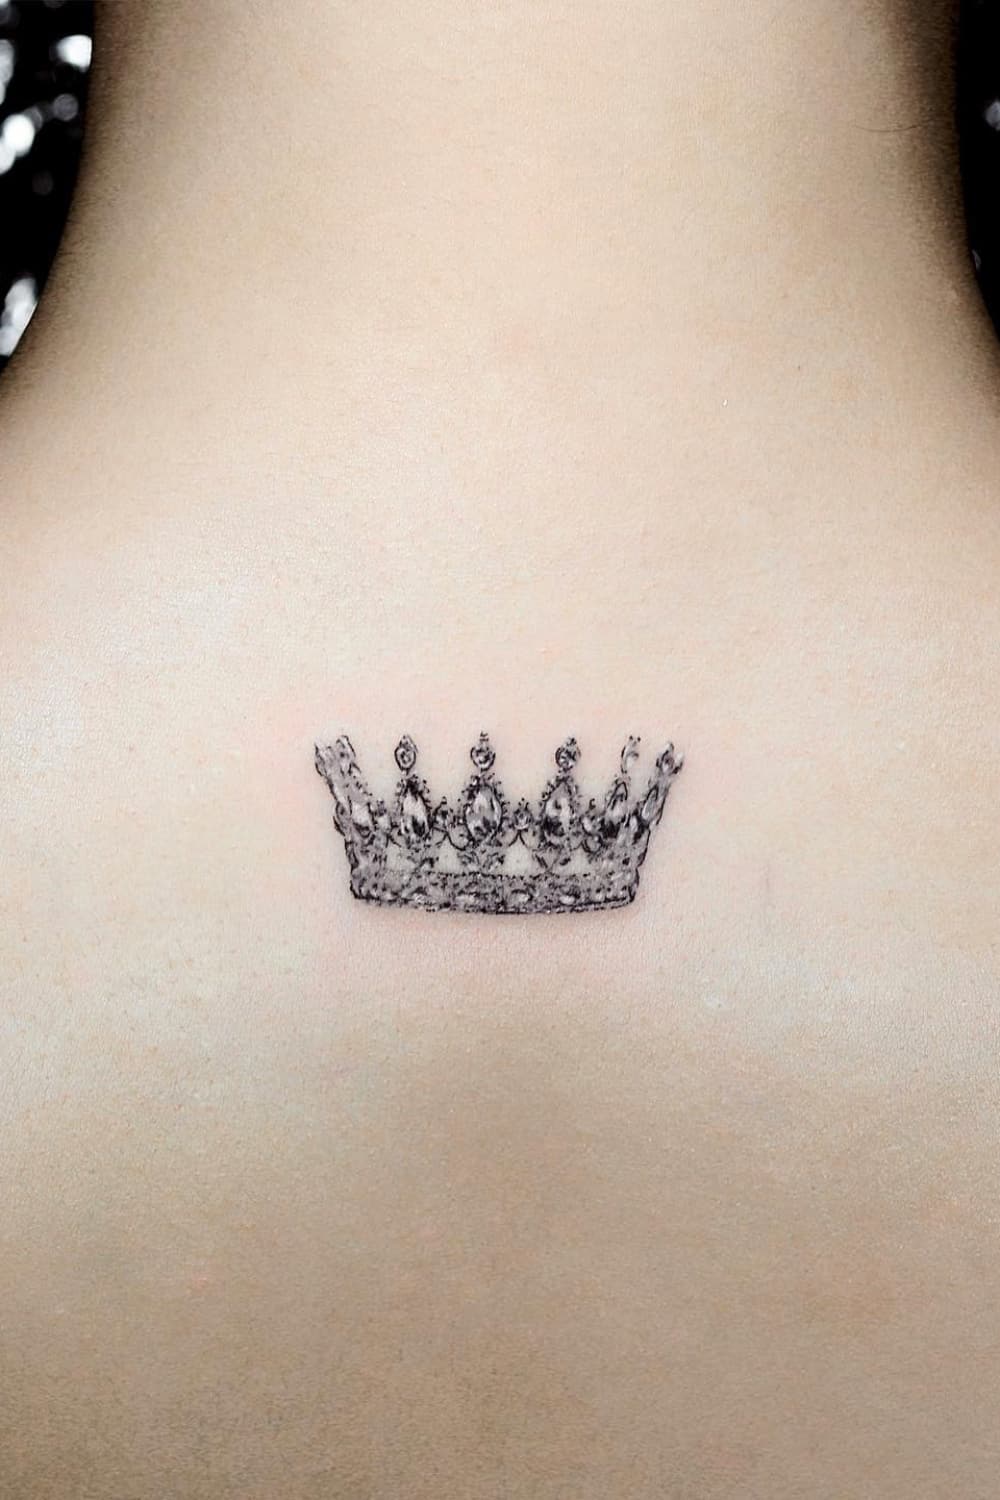 Crystal Crown Tattoo